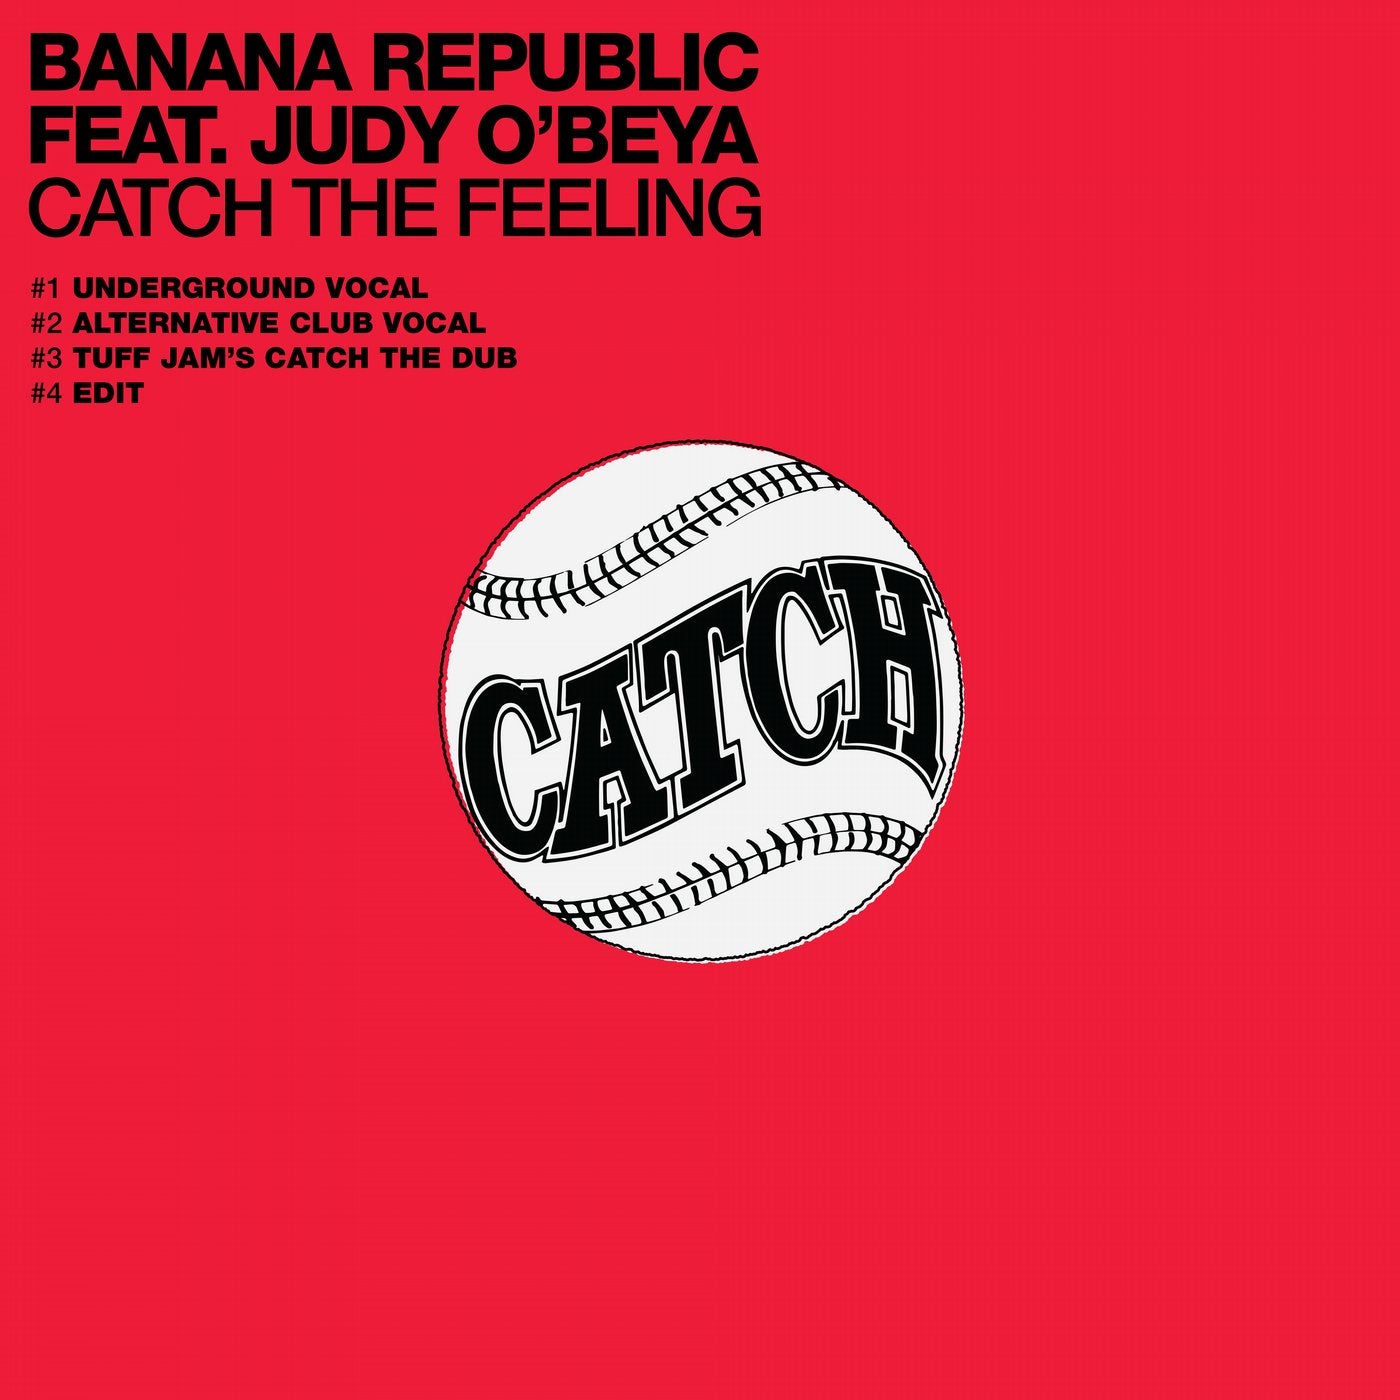 Feelings undercover. TJR. Vocal Club. New catch Republic. Dub ft.